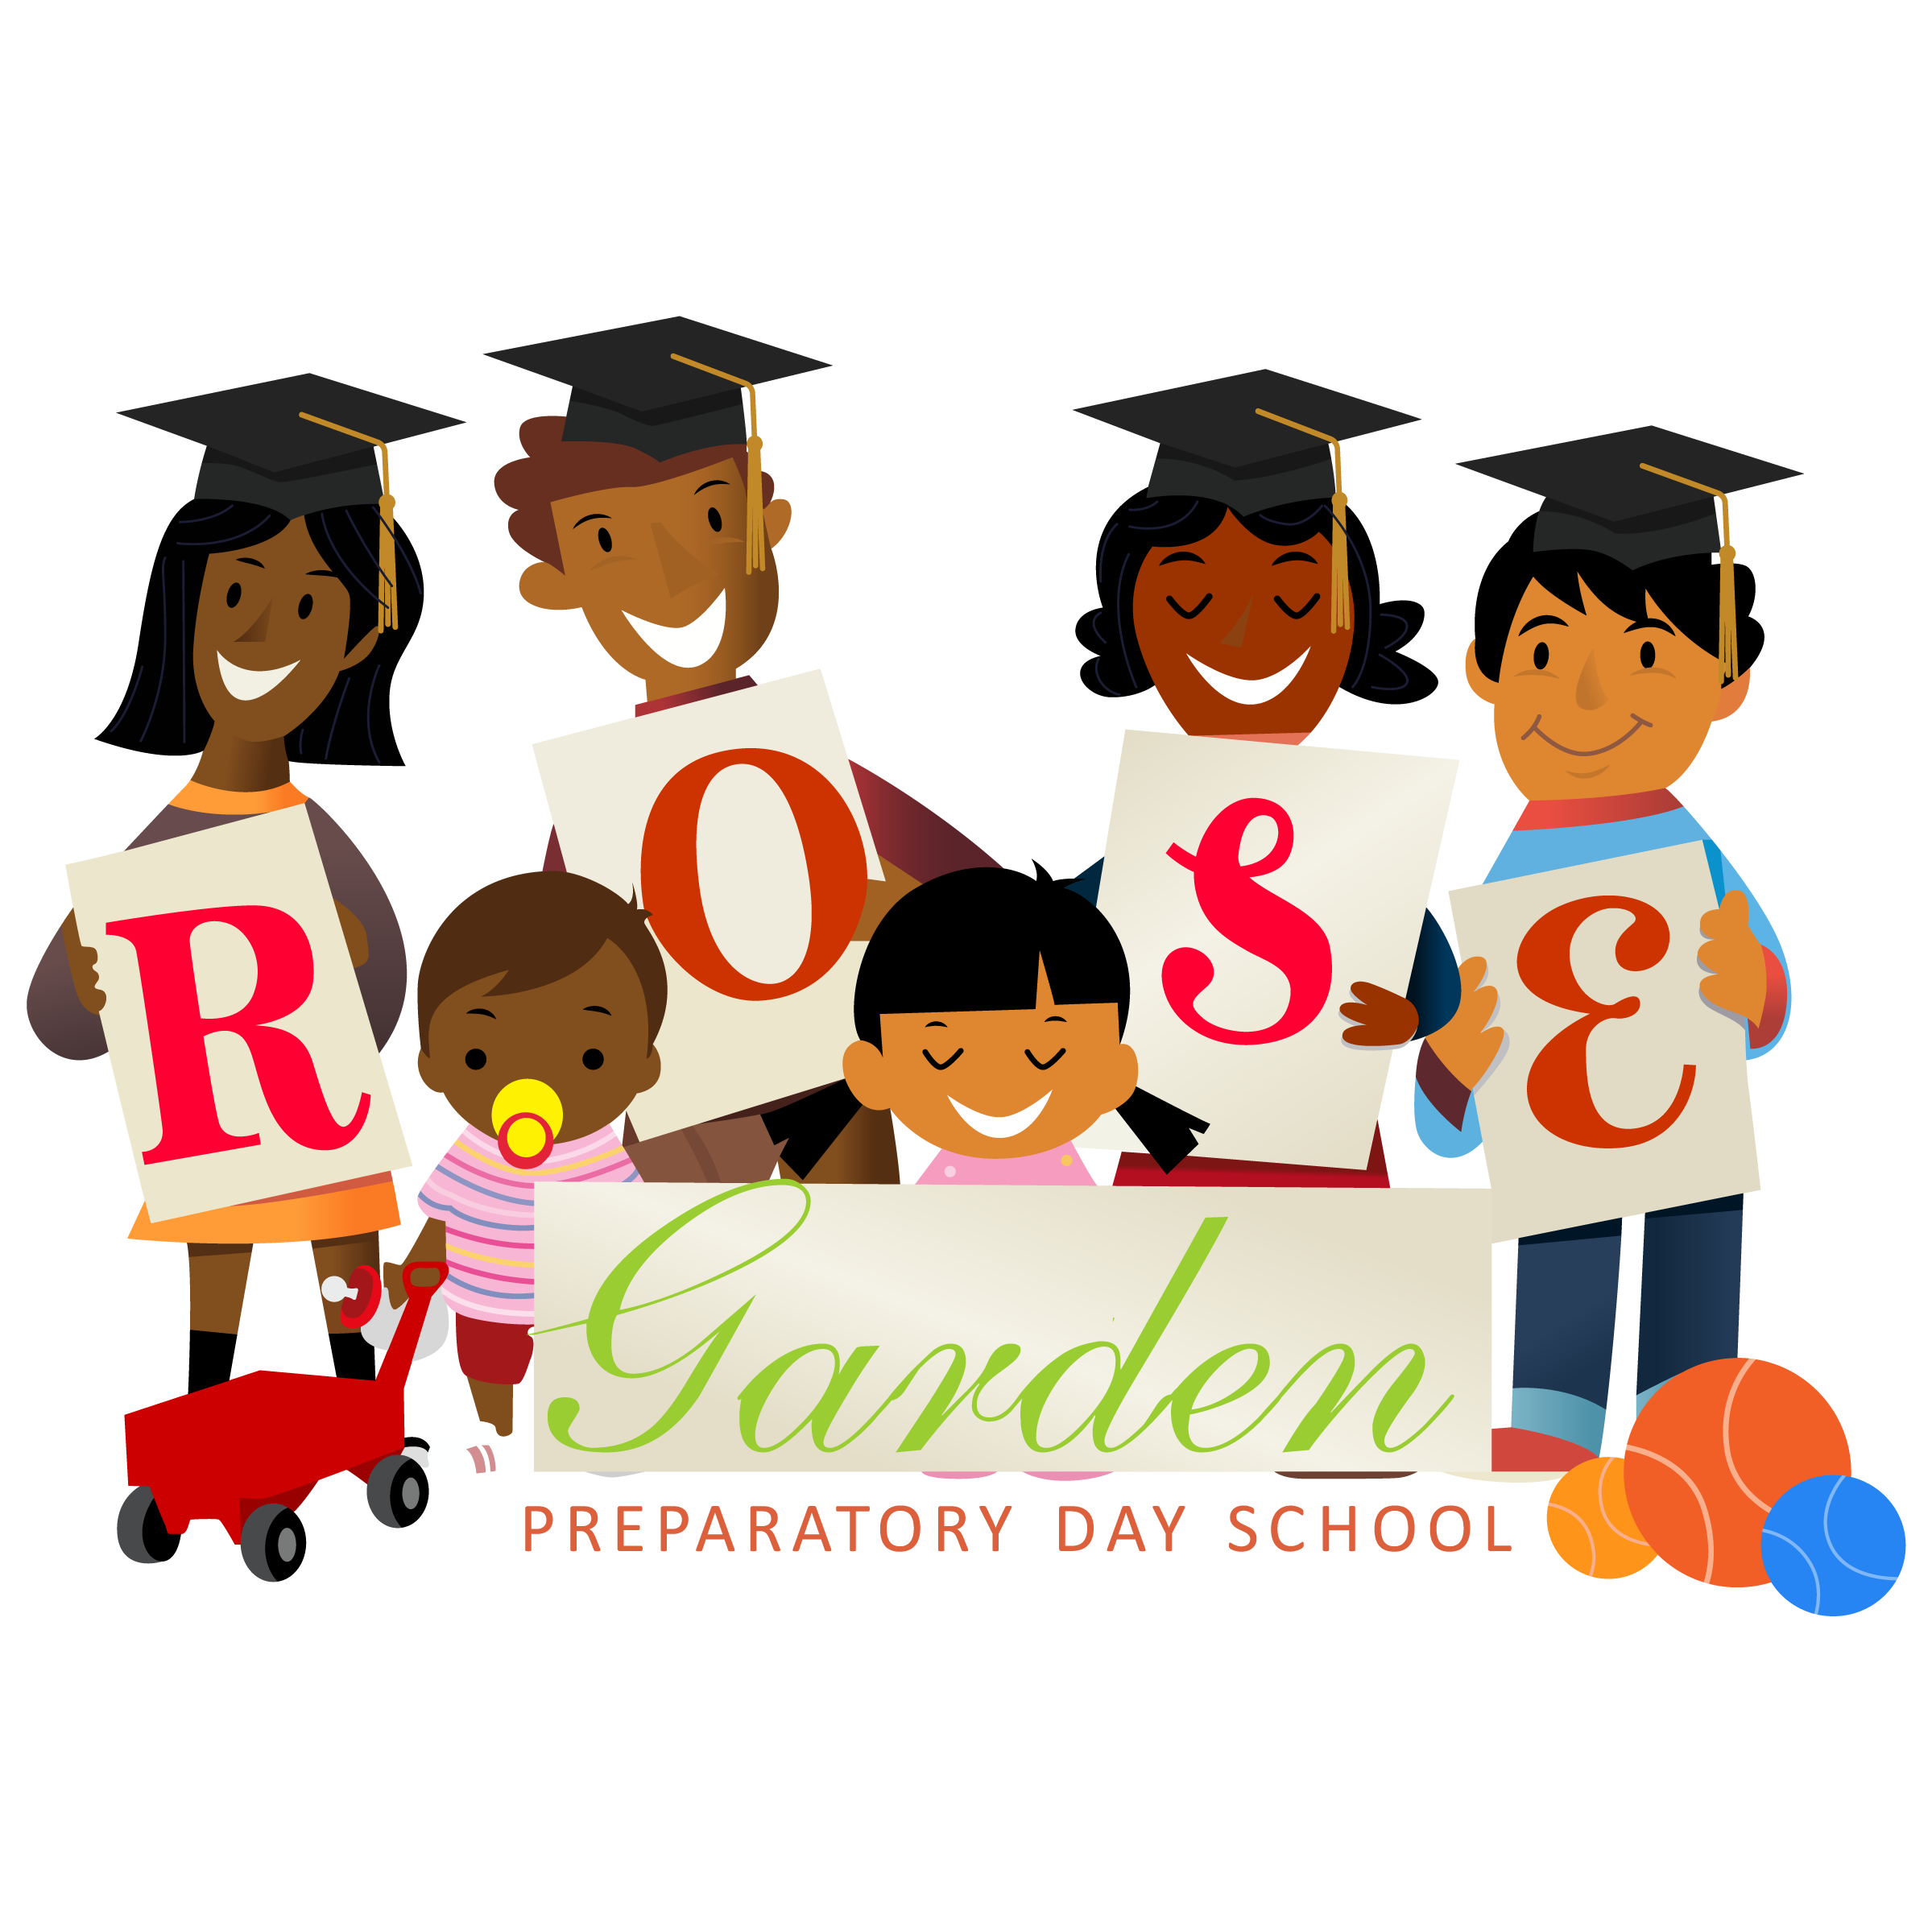 ROSE GARDEN PREPARATORY DAY SCHOOL